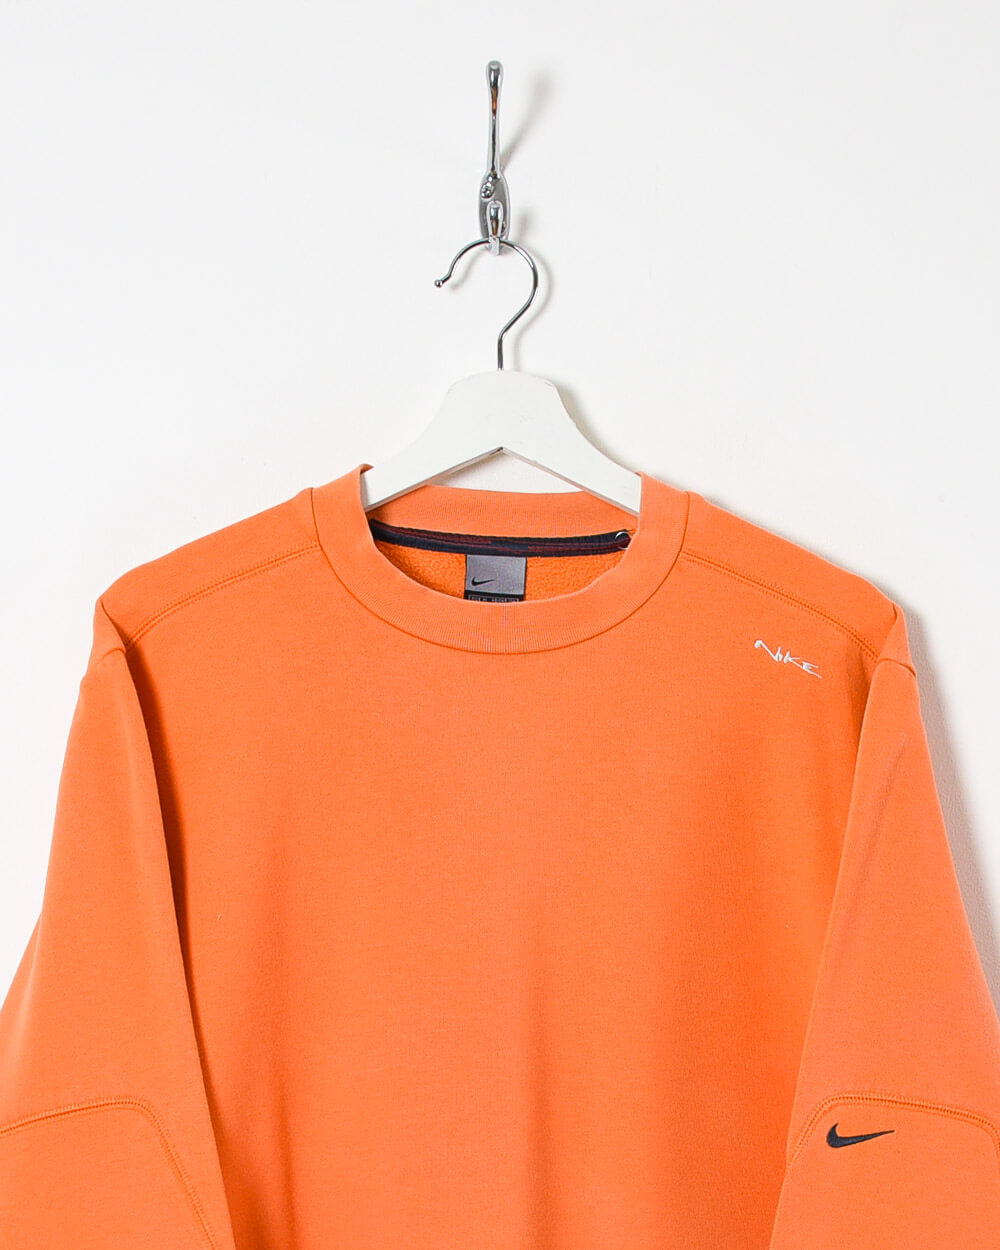 Orange Nike Sweatshirt - Medium